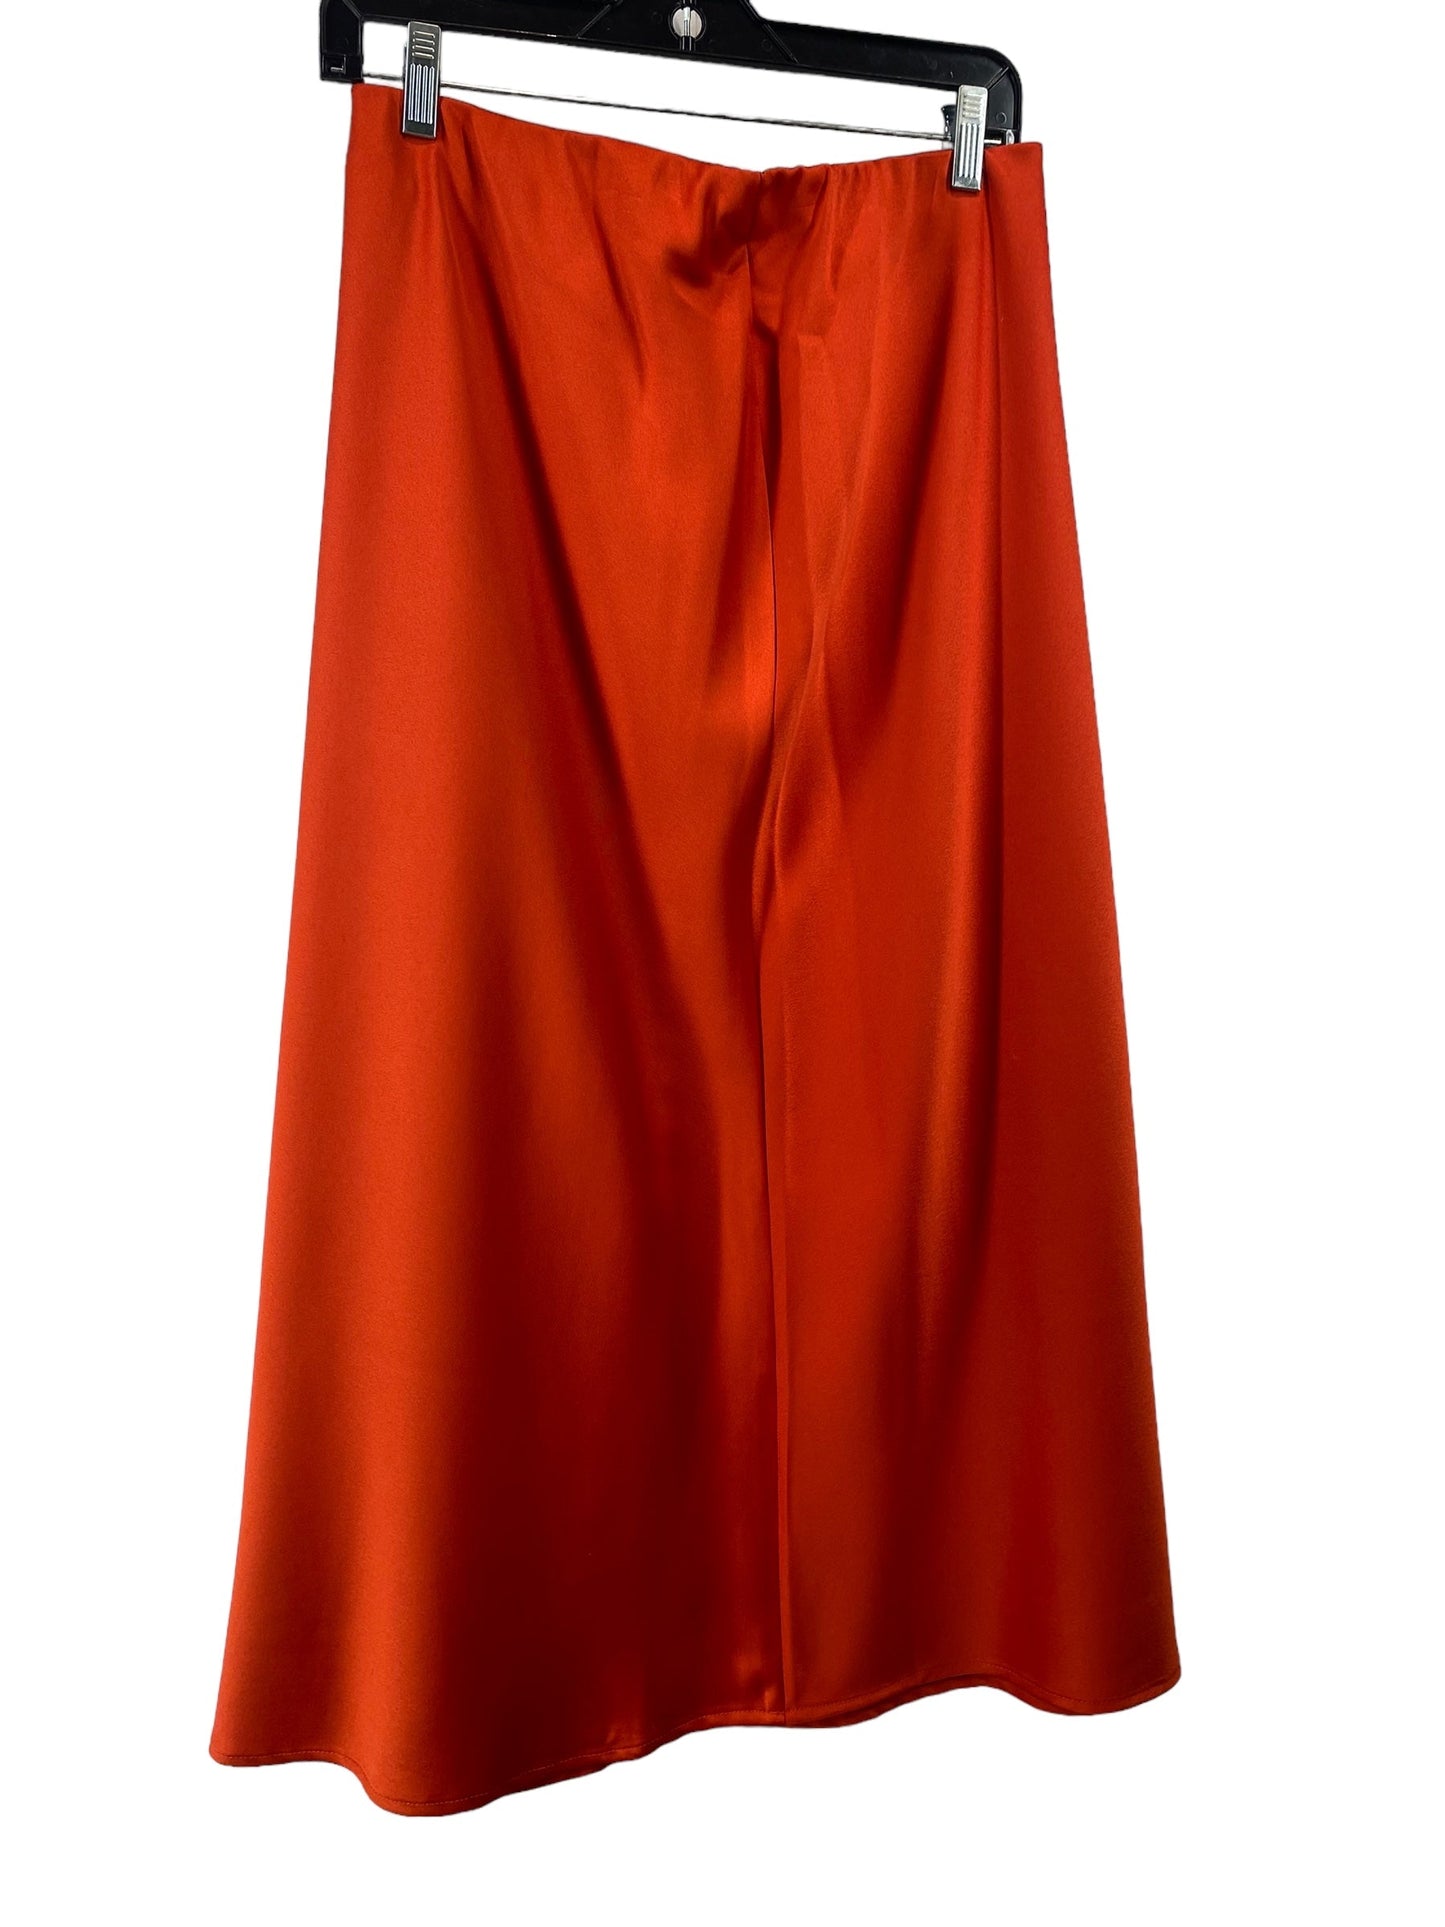 Orange Skirt Maxi A New Day, Size M